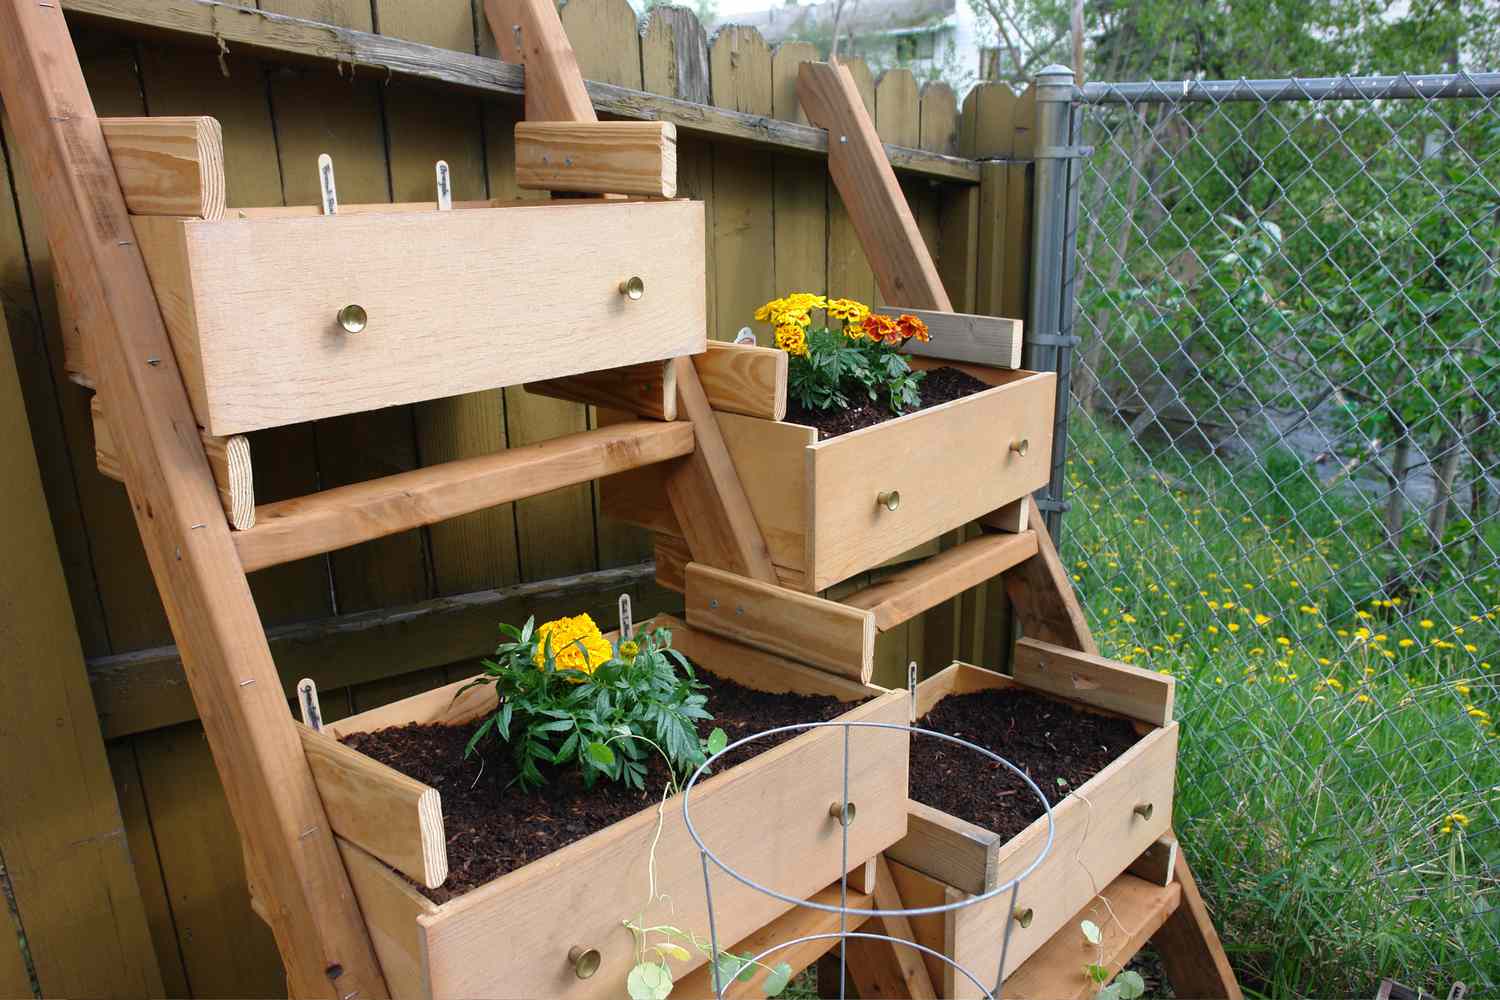 Dresser Turned into a Vegetable Garden